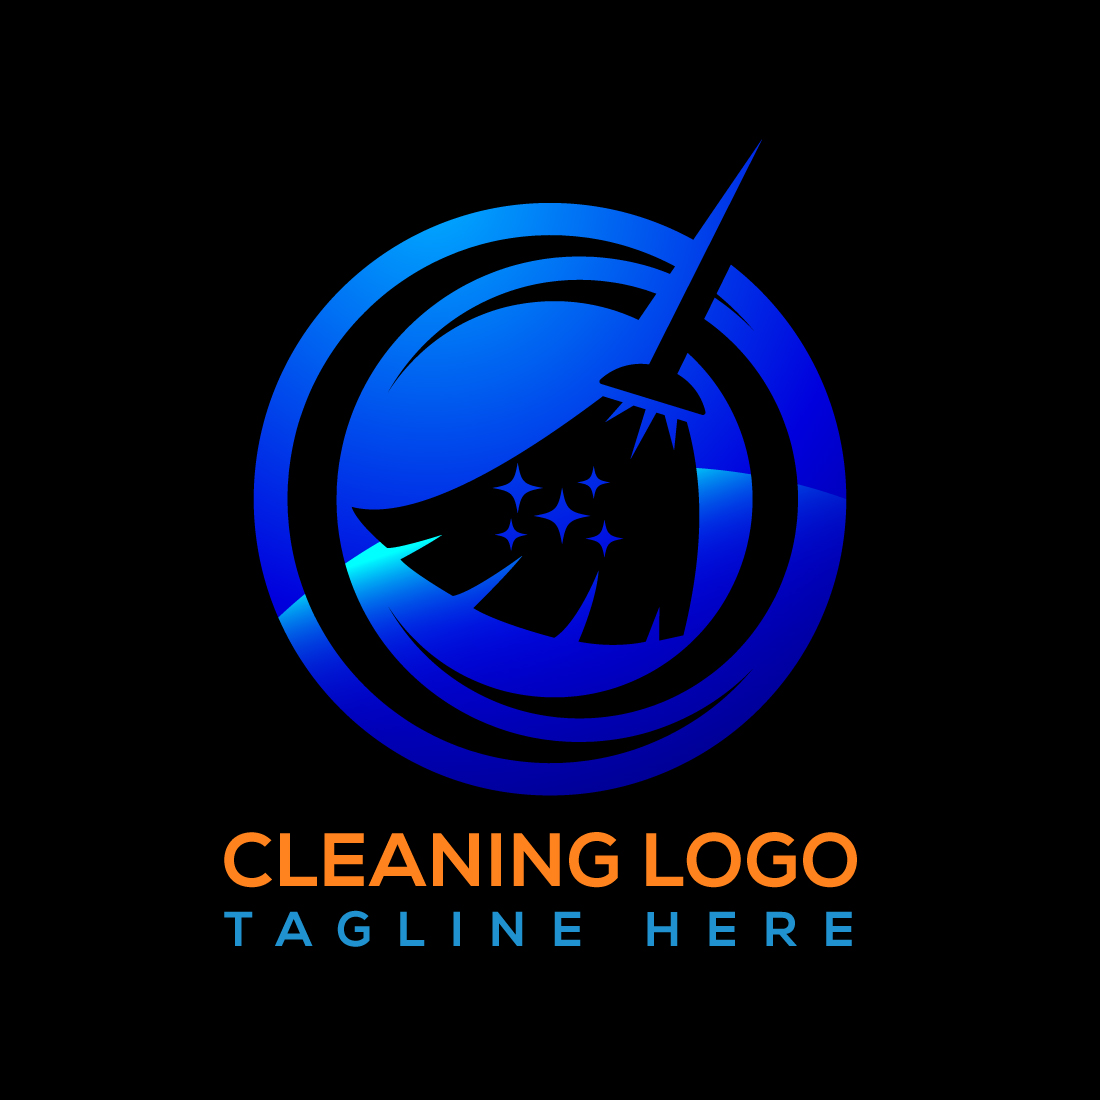 Cleaning Broom Service Black Logo Design cover image.